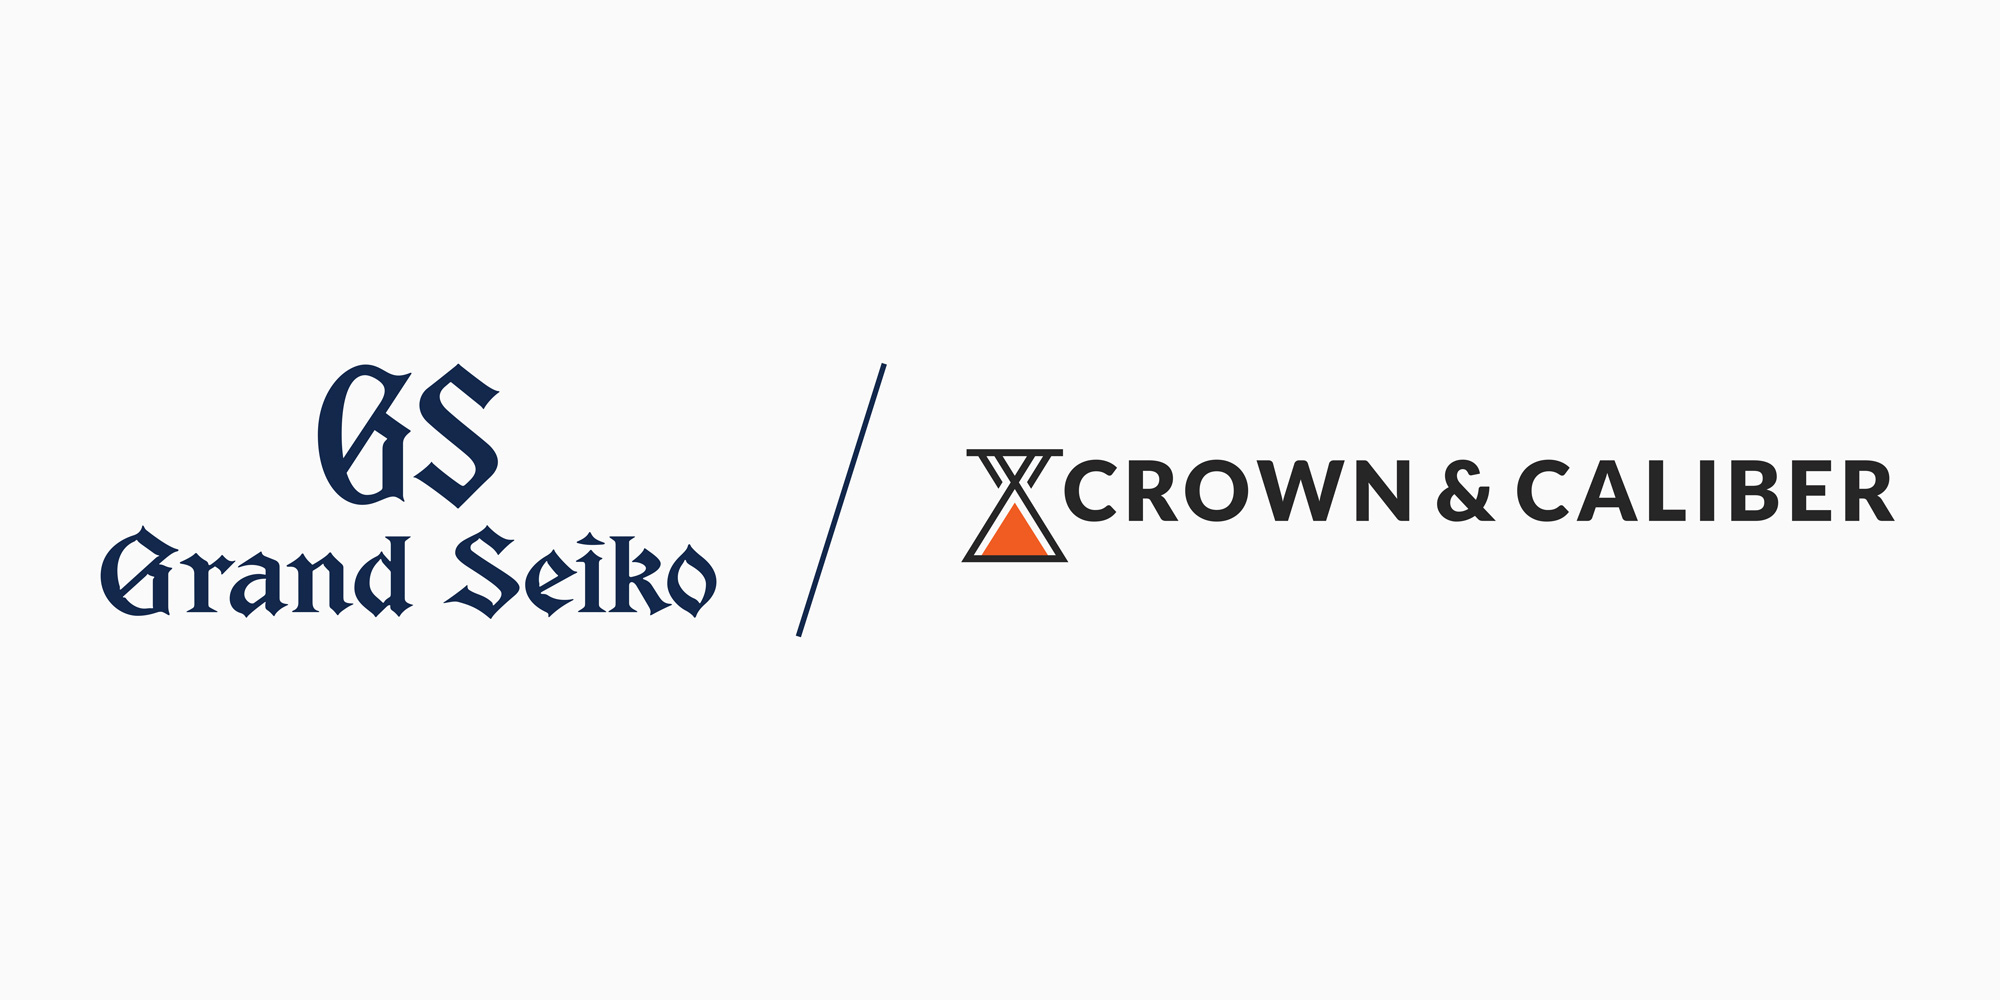 Grand Seiko Crown & Caliber logos